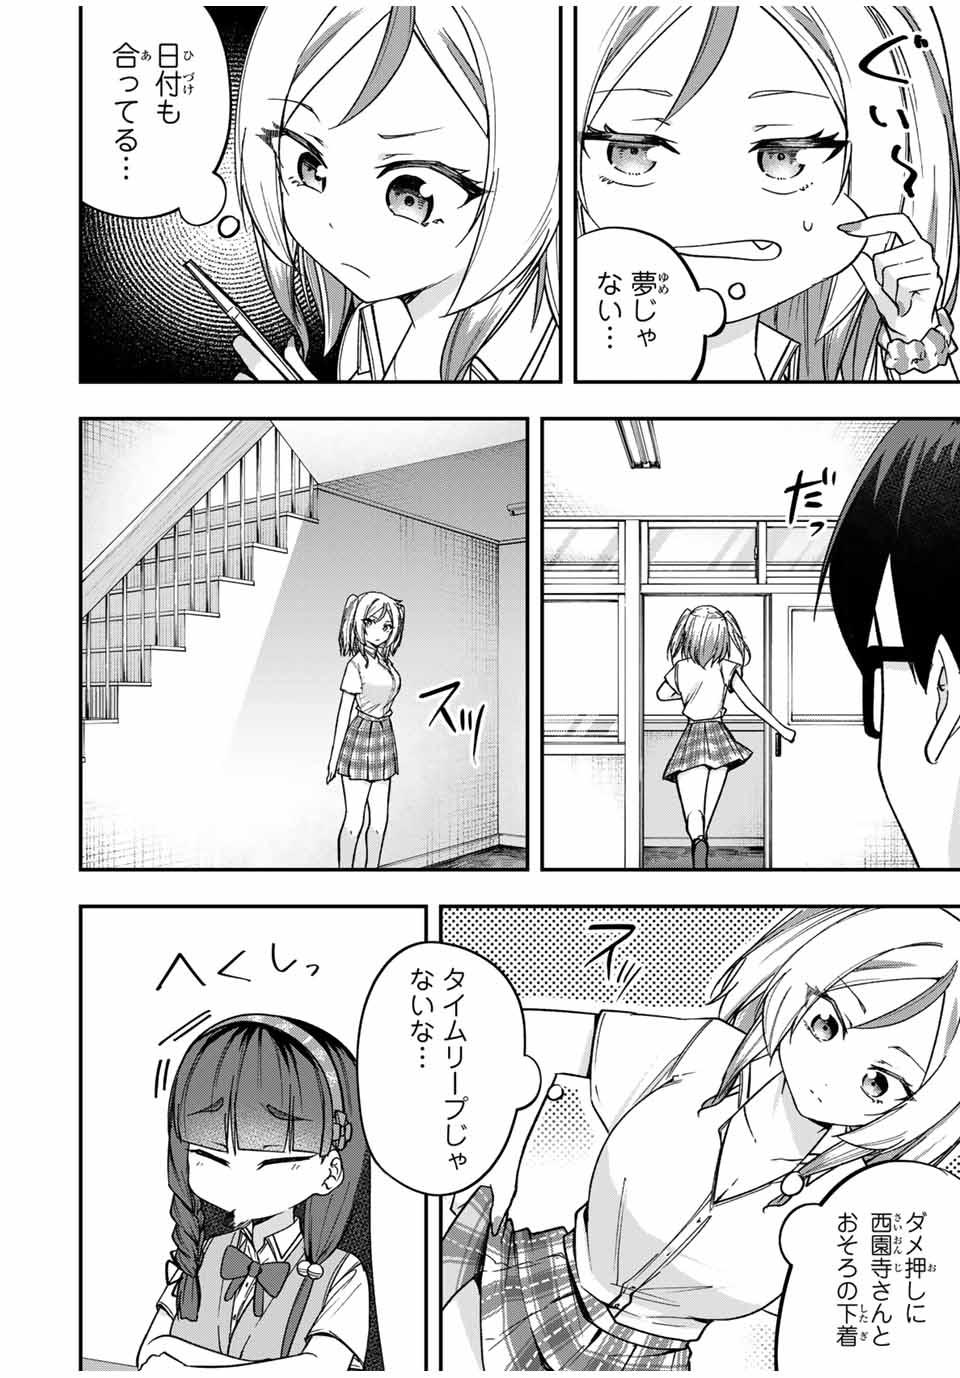 Heroine wa xx Okasegitai - Chapter 8 - Page 2